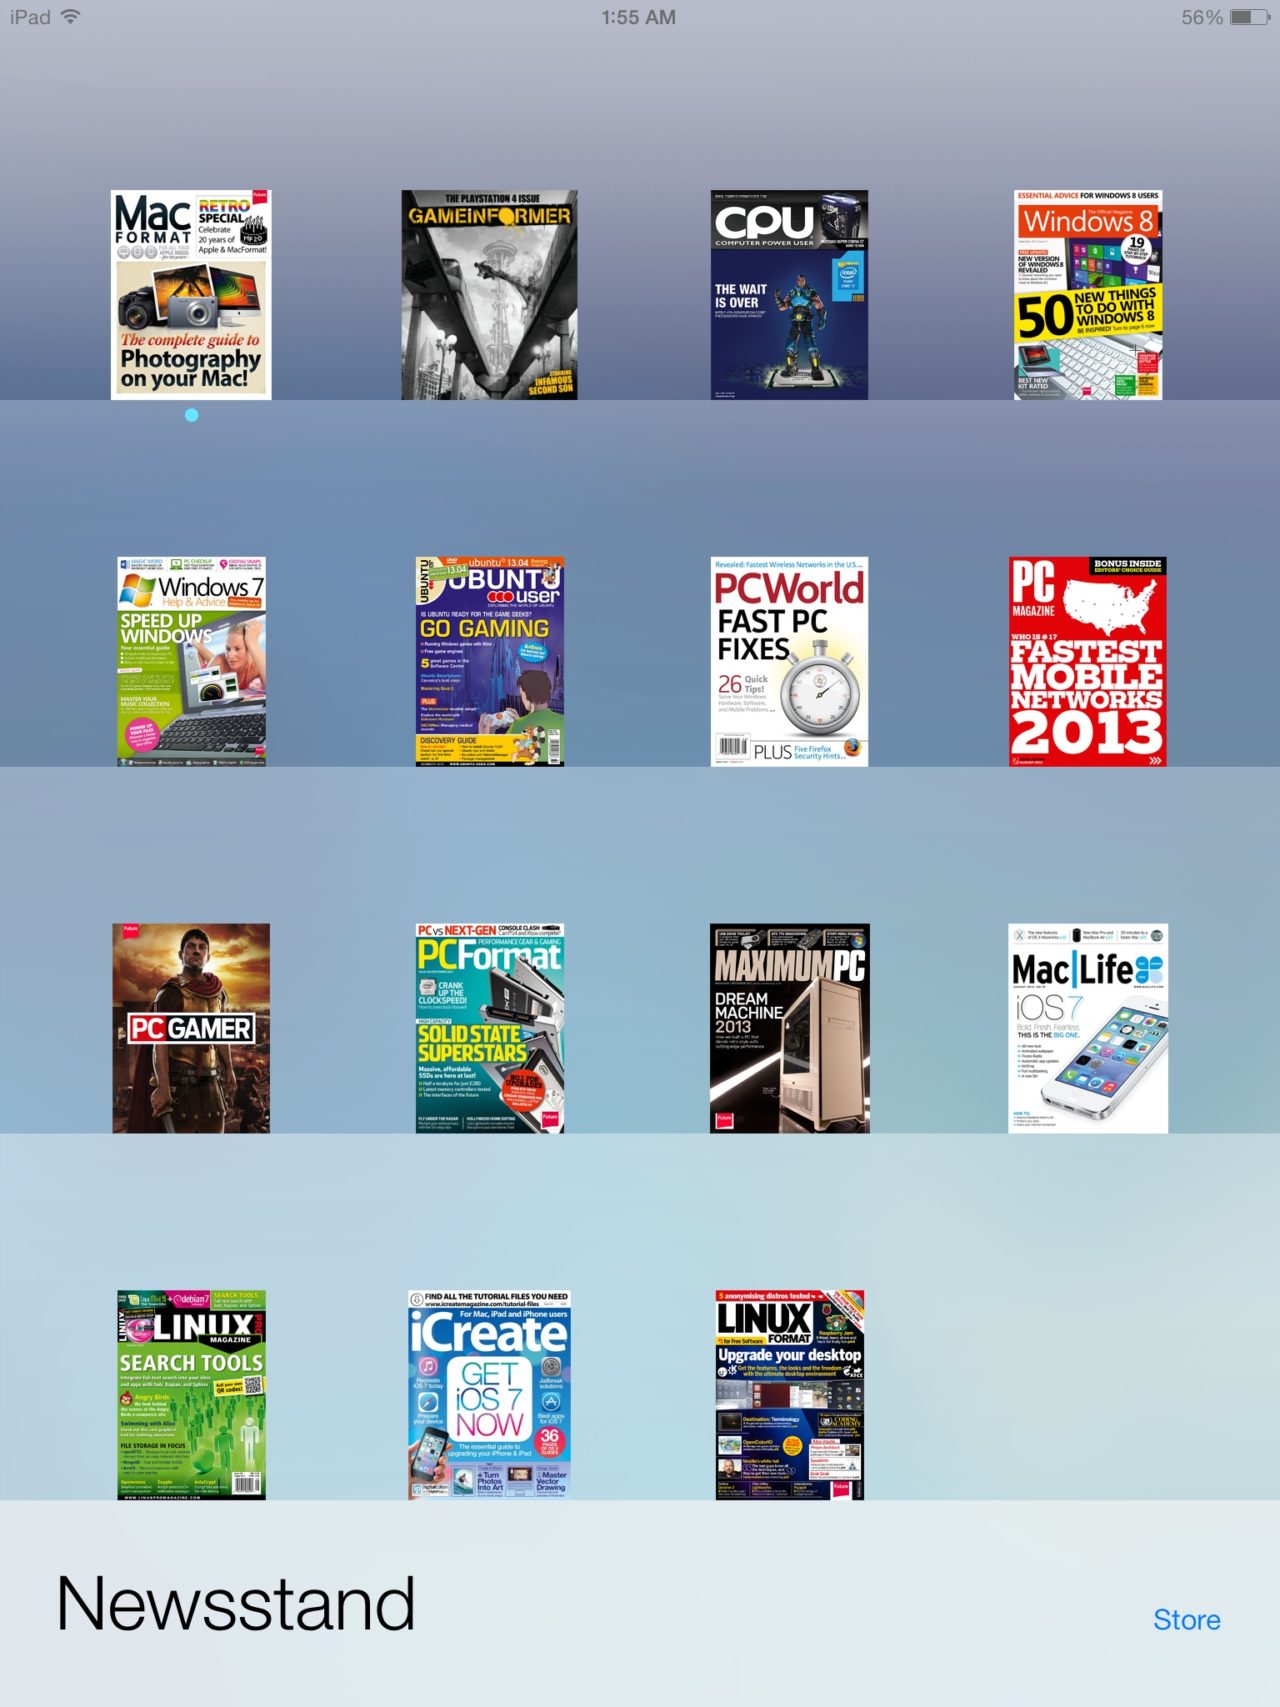 Redesign Newsstand iOS 7